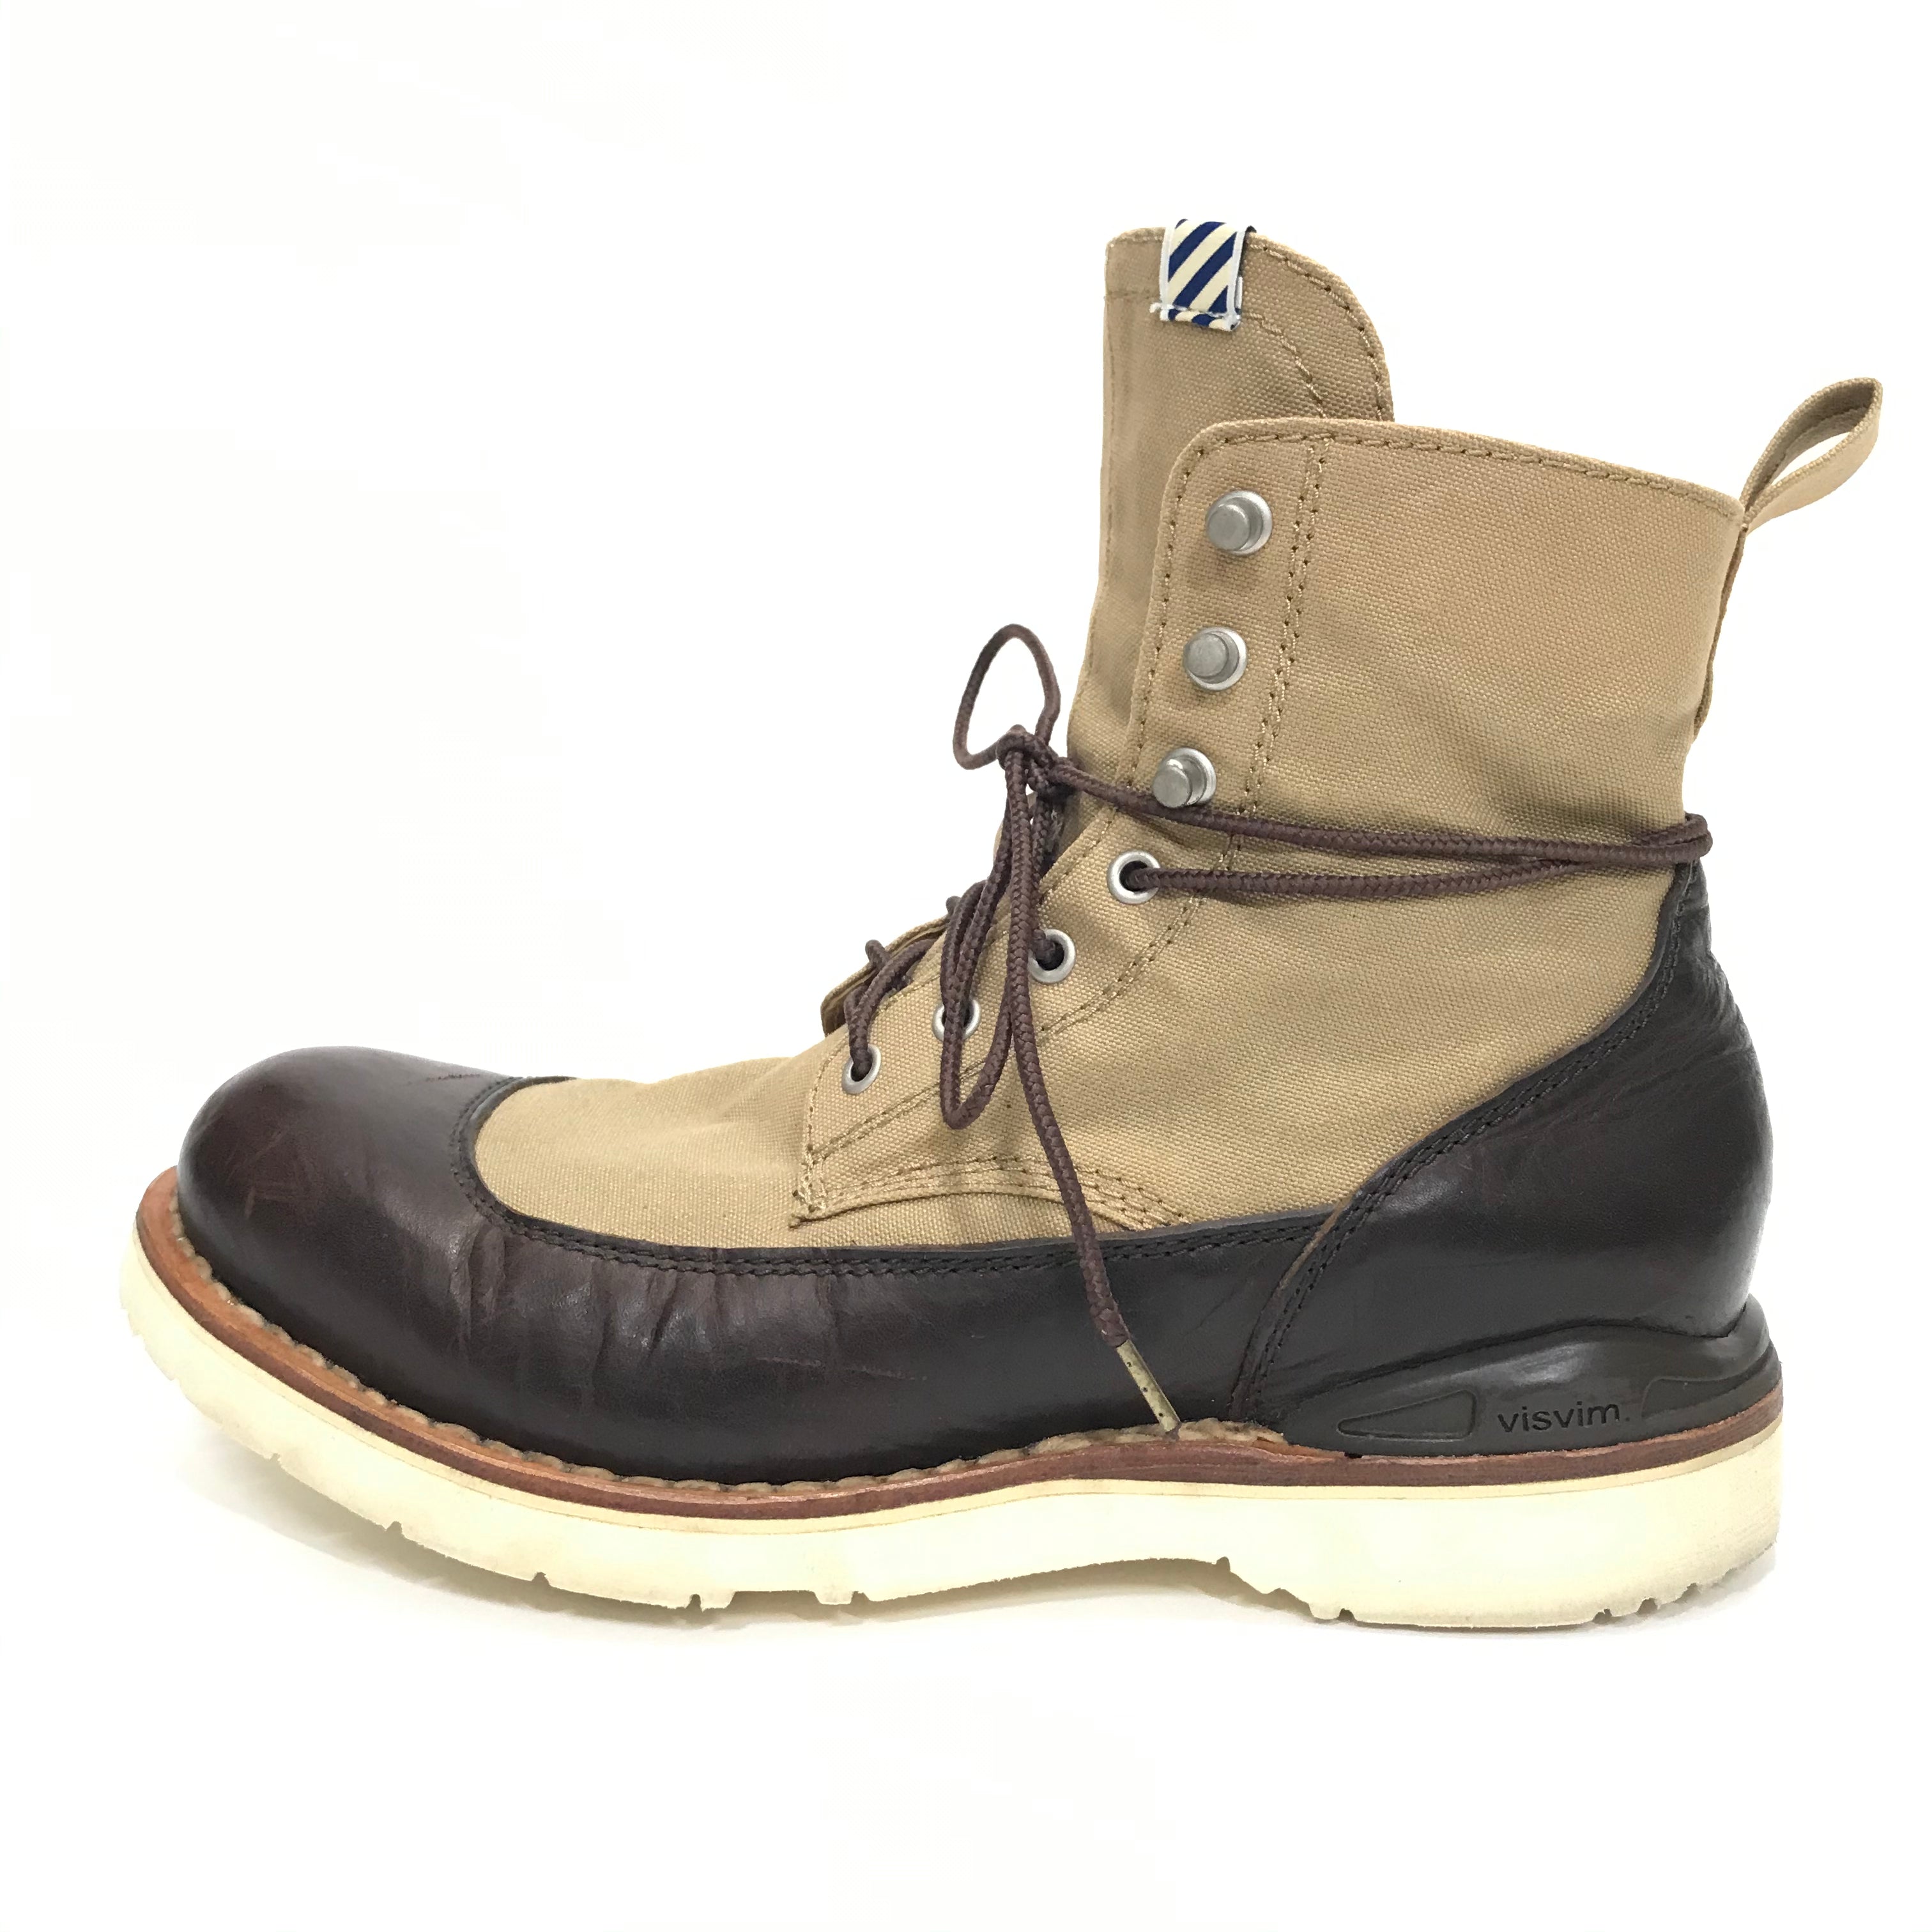 8.5] Visvim Boots – StylisticsJapan.com